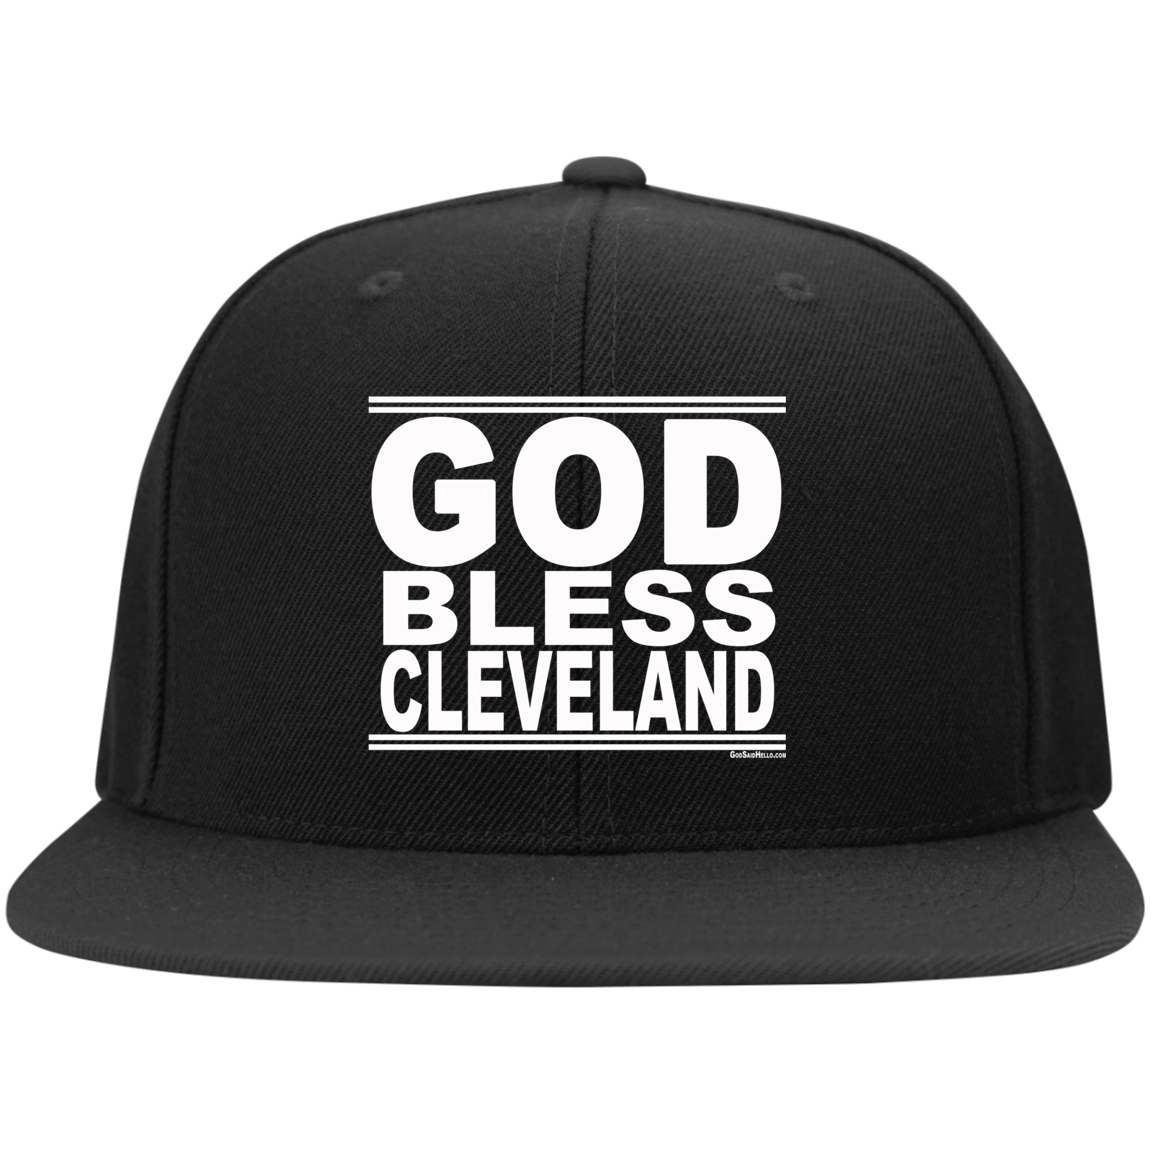 #GodBlessCleveland - Snapback Hat